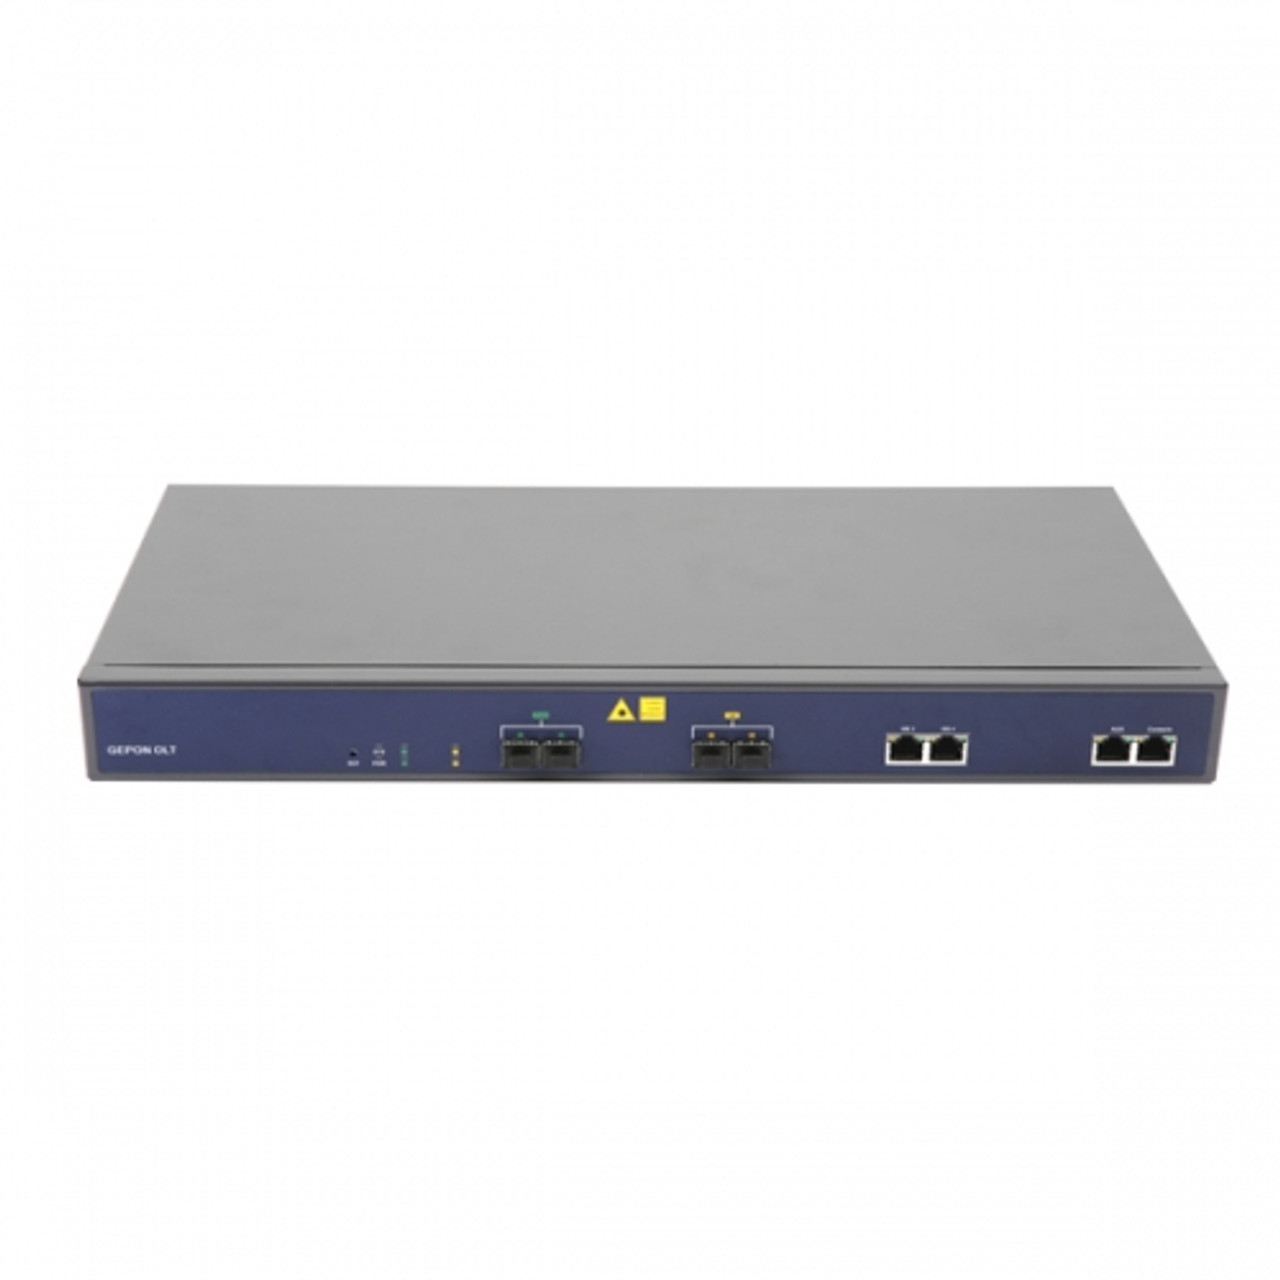 OLT de 2 puerto EPON + 4 puertos Uplink (2 puertos Gigabit Ethernet + 1 puerto SFP) , hasta 128 ONU <br>  <strong>Código SAT:</strong> 43222610 - V1600-D2